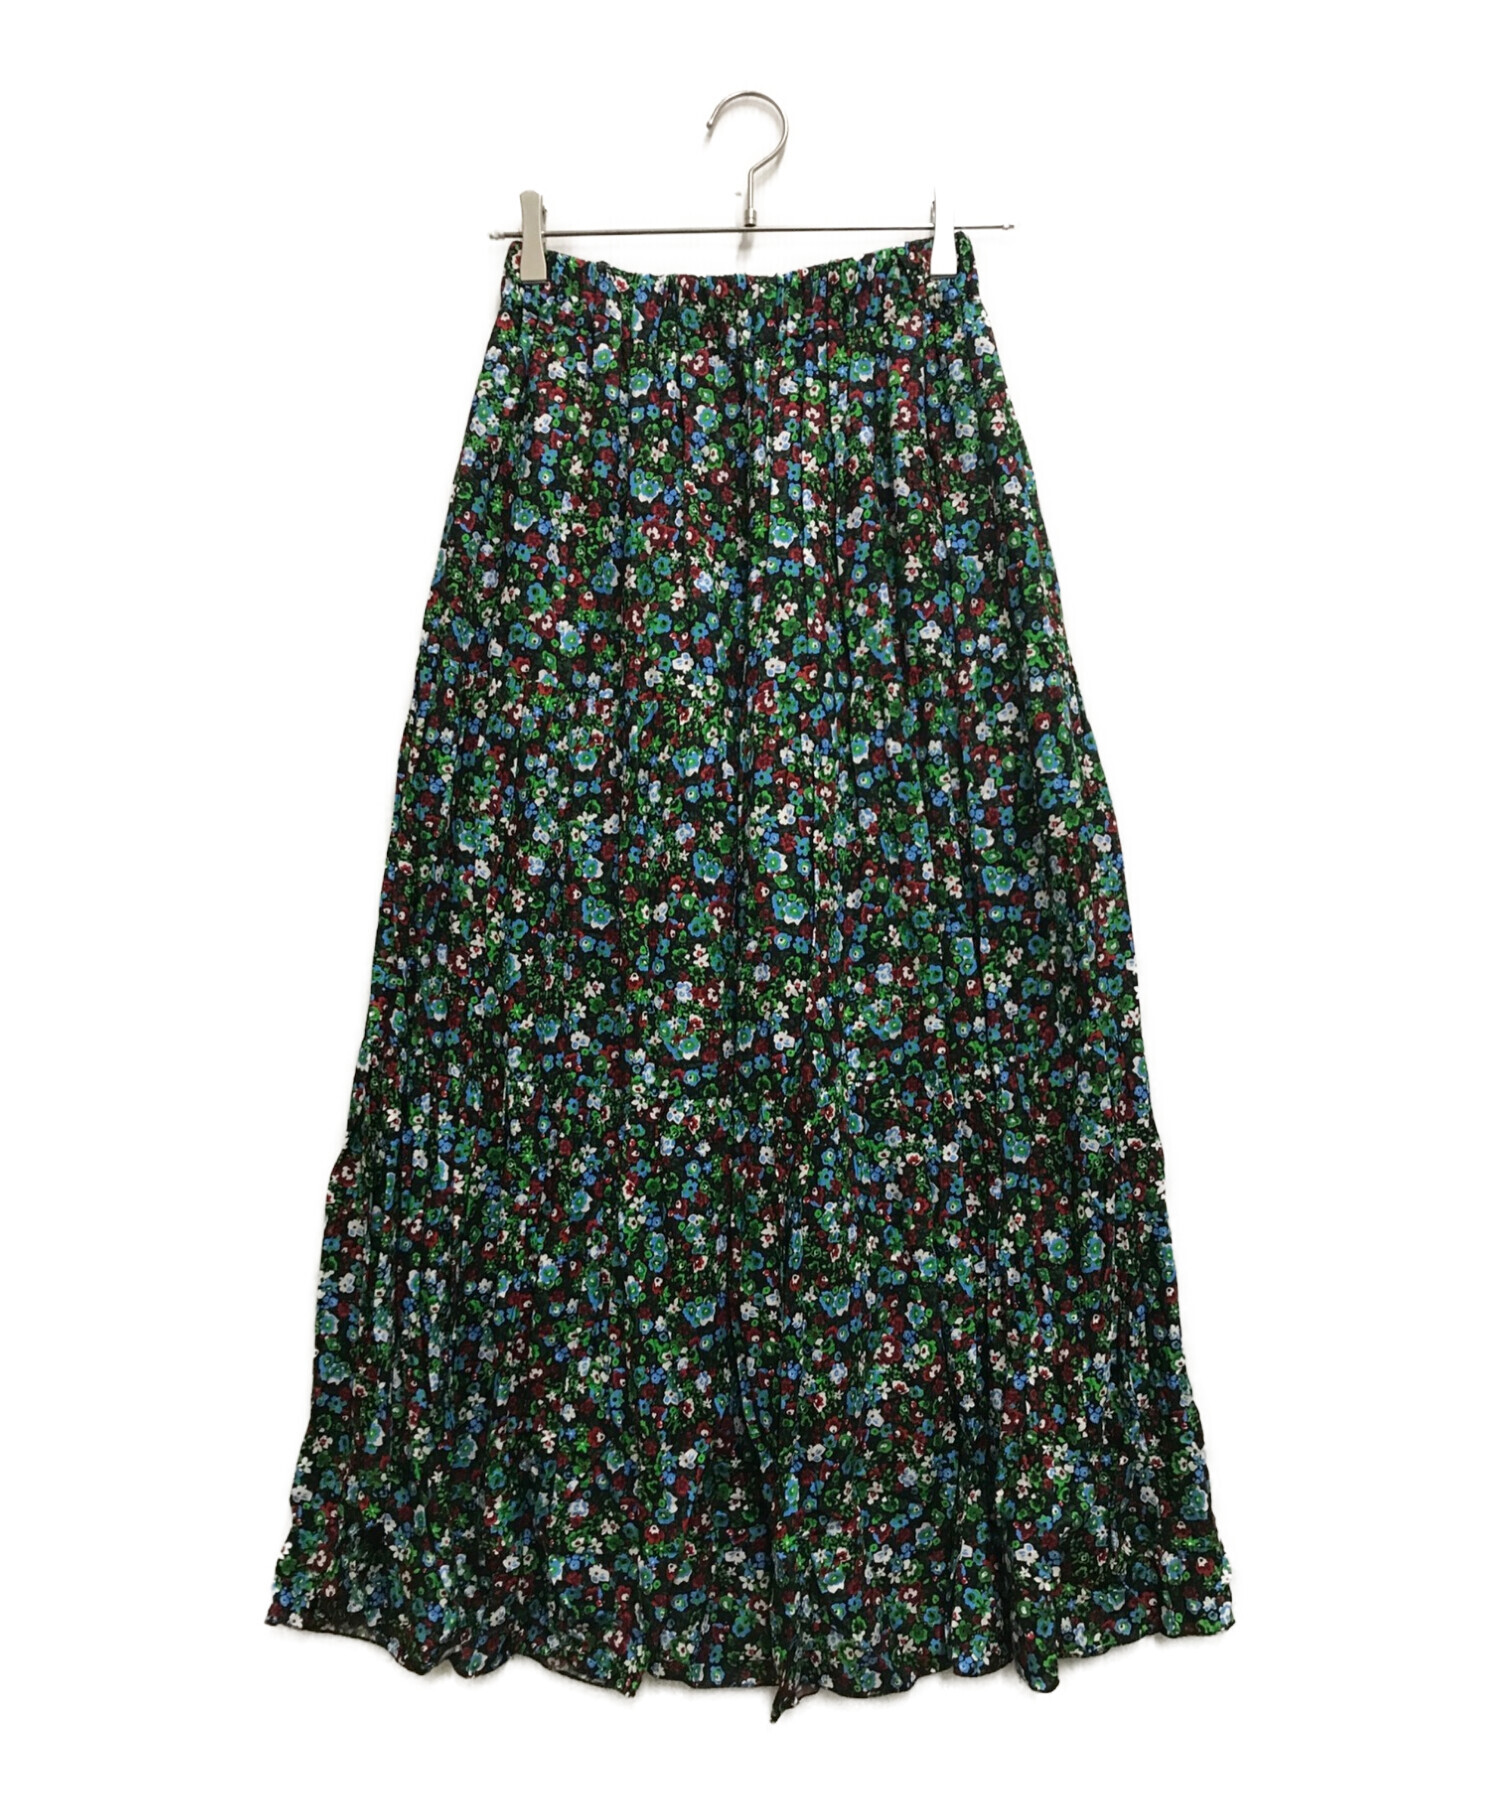 SACRA (サクラ) DAZZLING FLOWERSスカート ブラック×グリーン サイズ:38